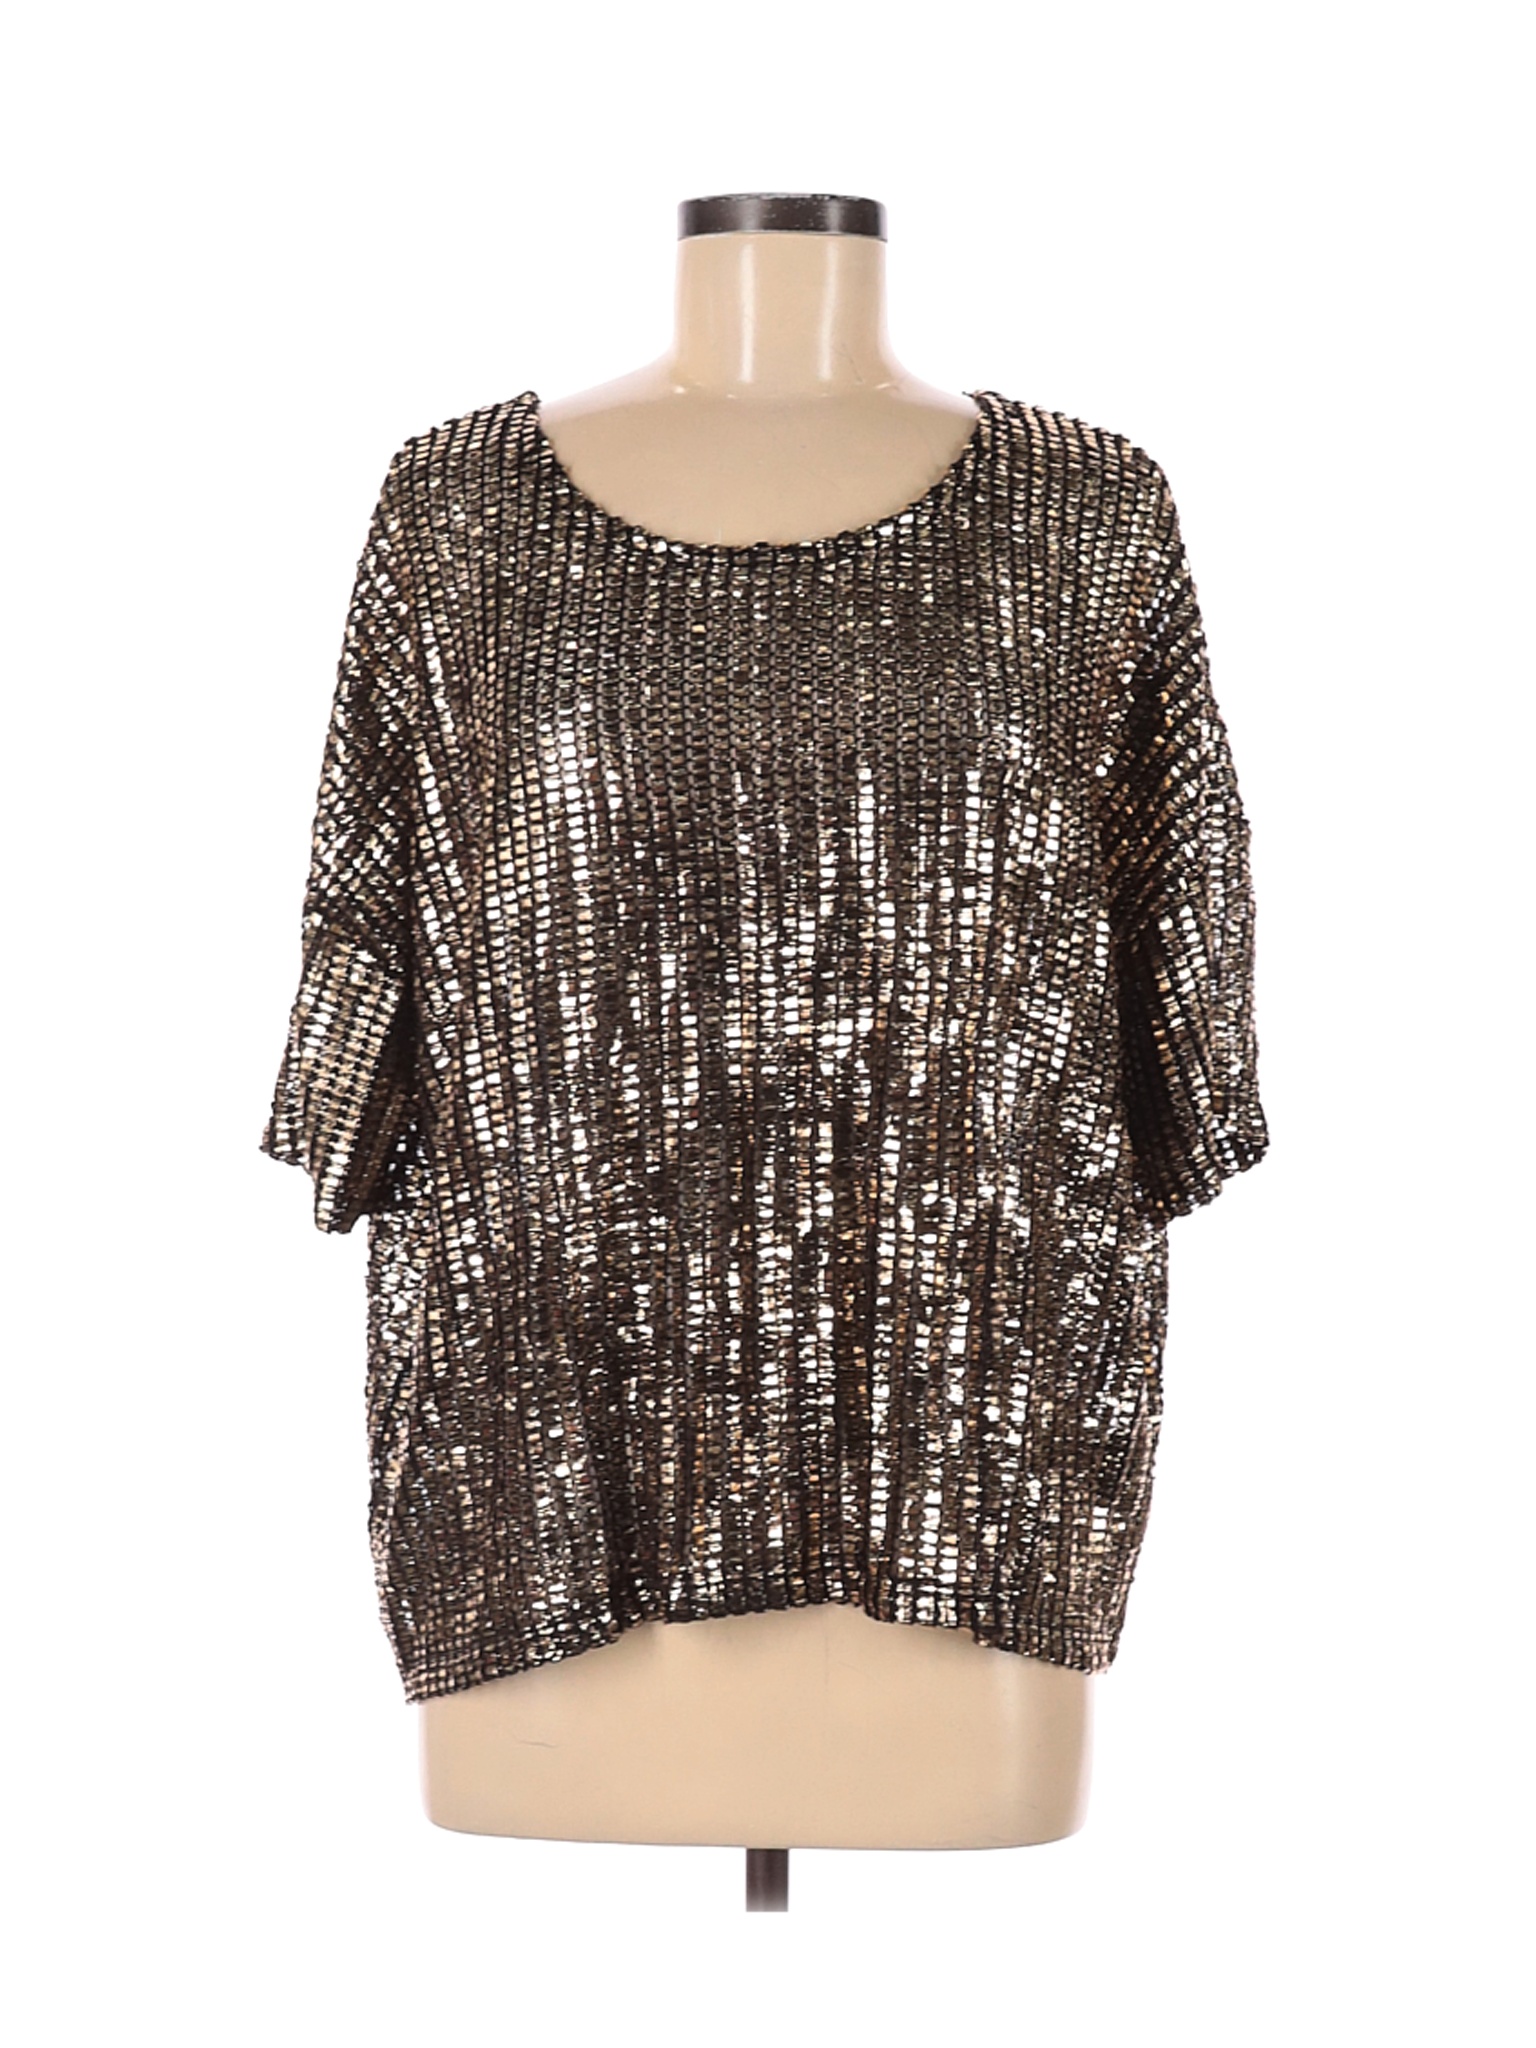 H&M Women Gold Short Sleeve Blouse M | eBay